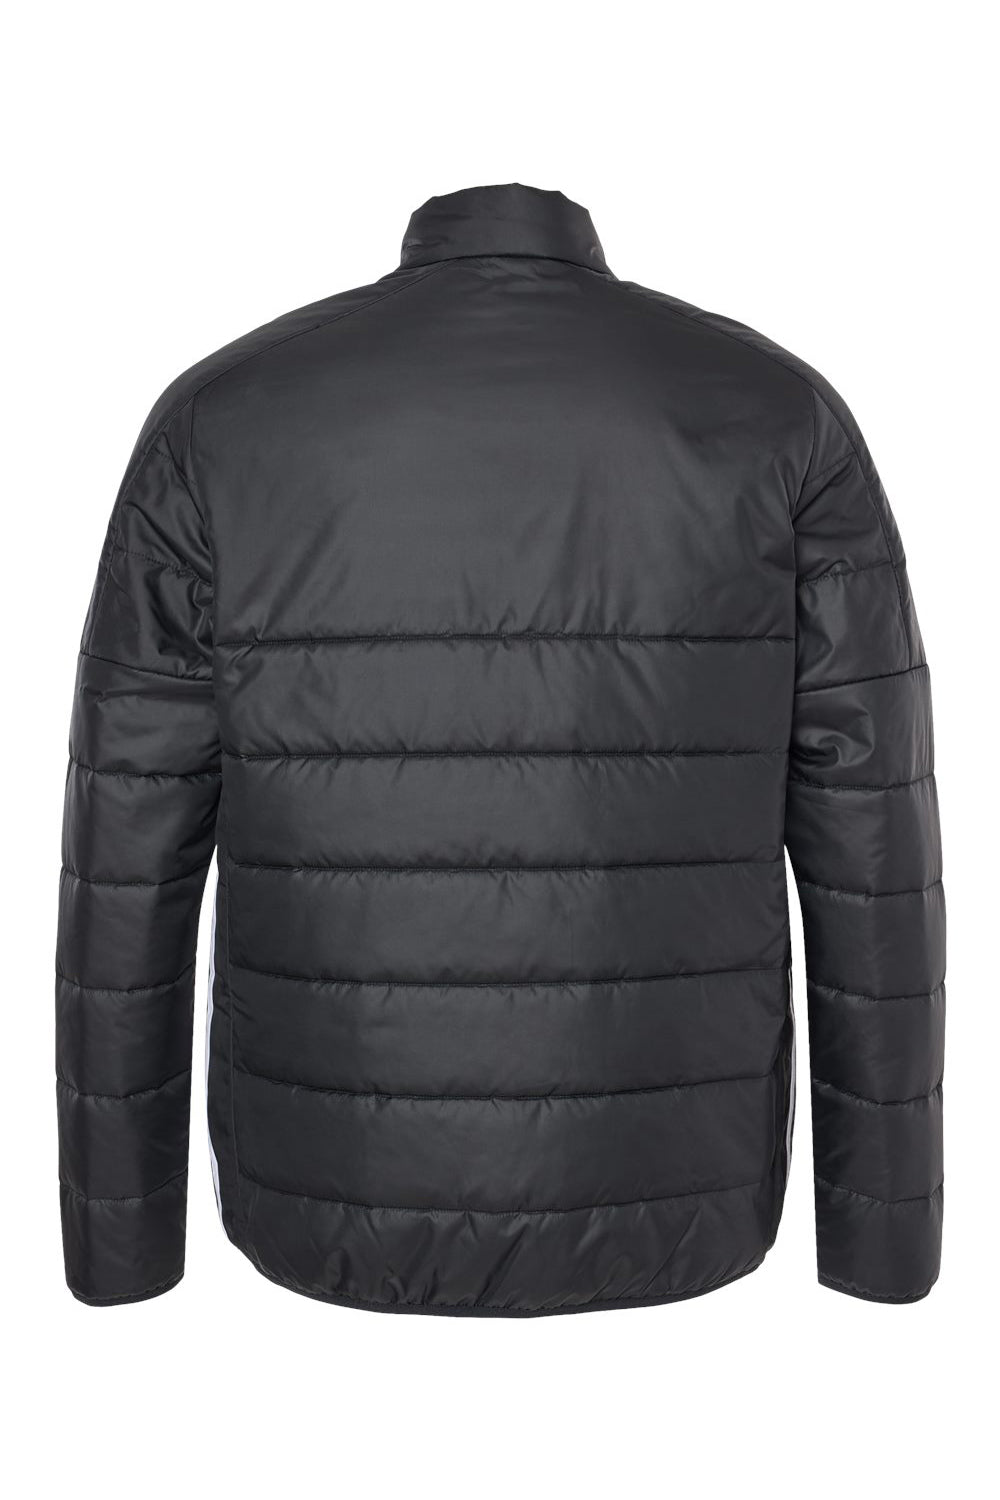 Adidas A570 Mens Full Zip Puffer Jacket Black Flat Back